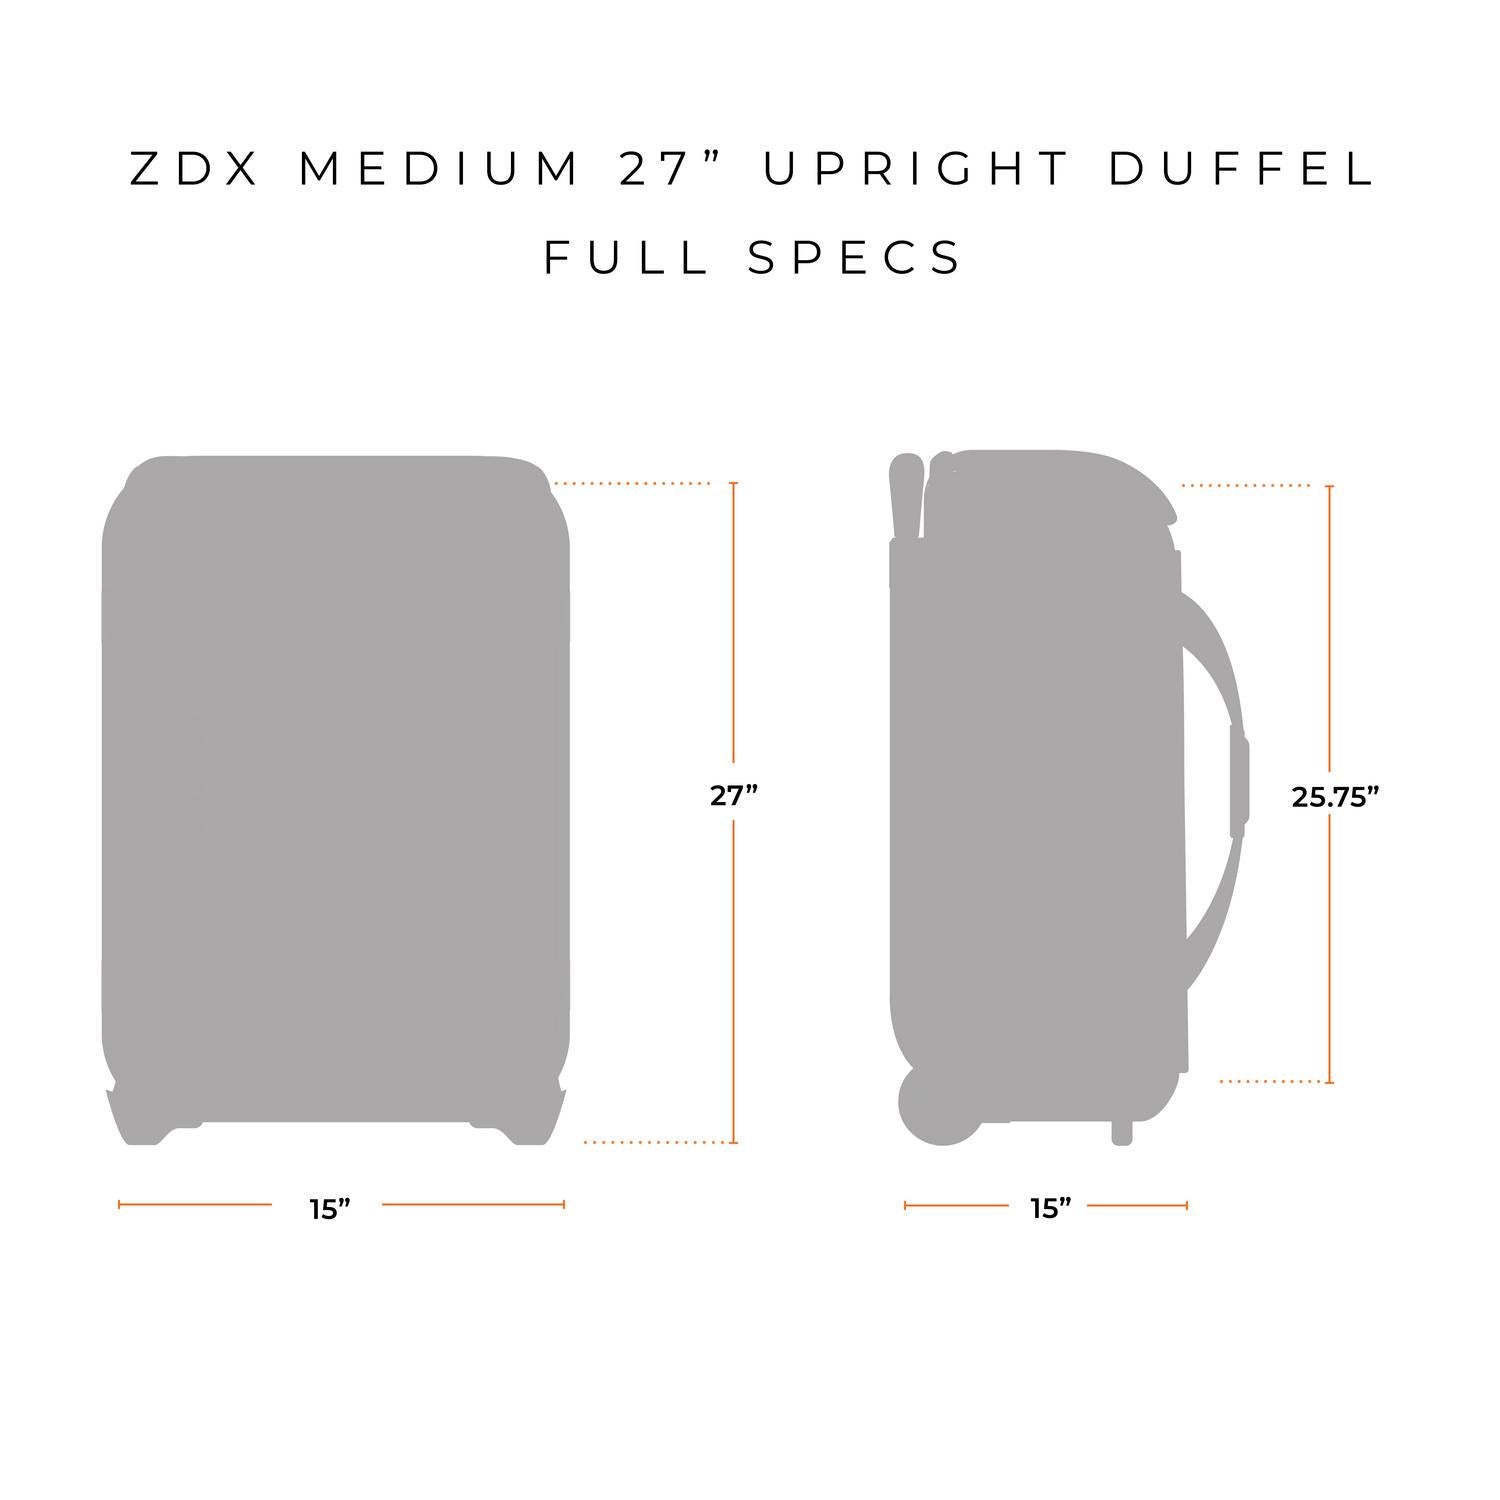 ZDX Medium 27" Upright Duffel Full Specs 15"x27" and 15"x25.75" #color_hunter